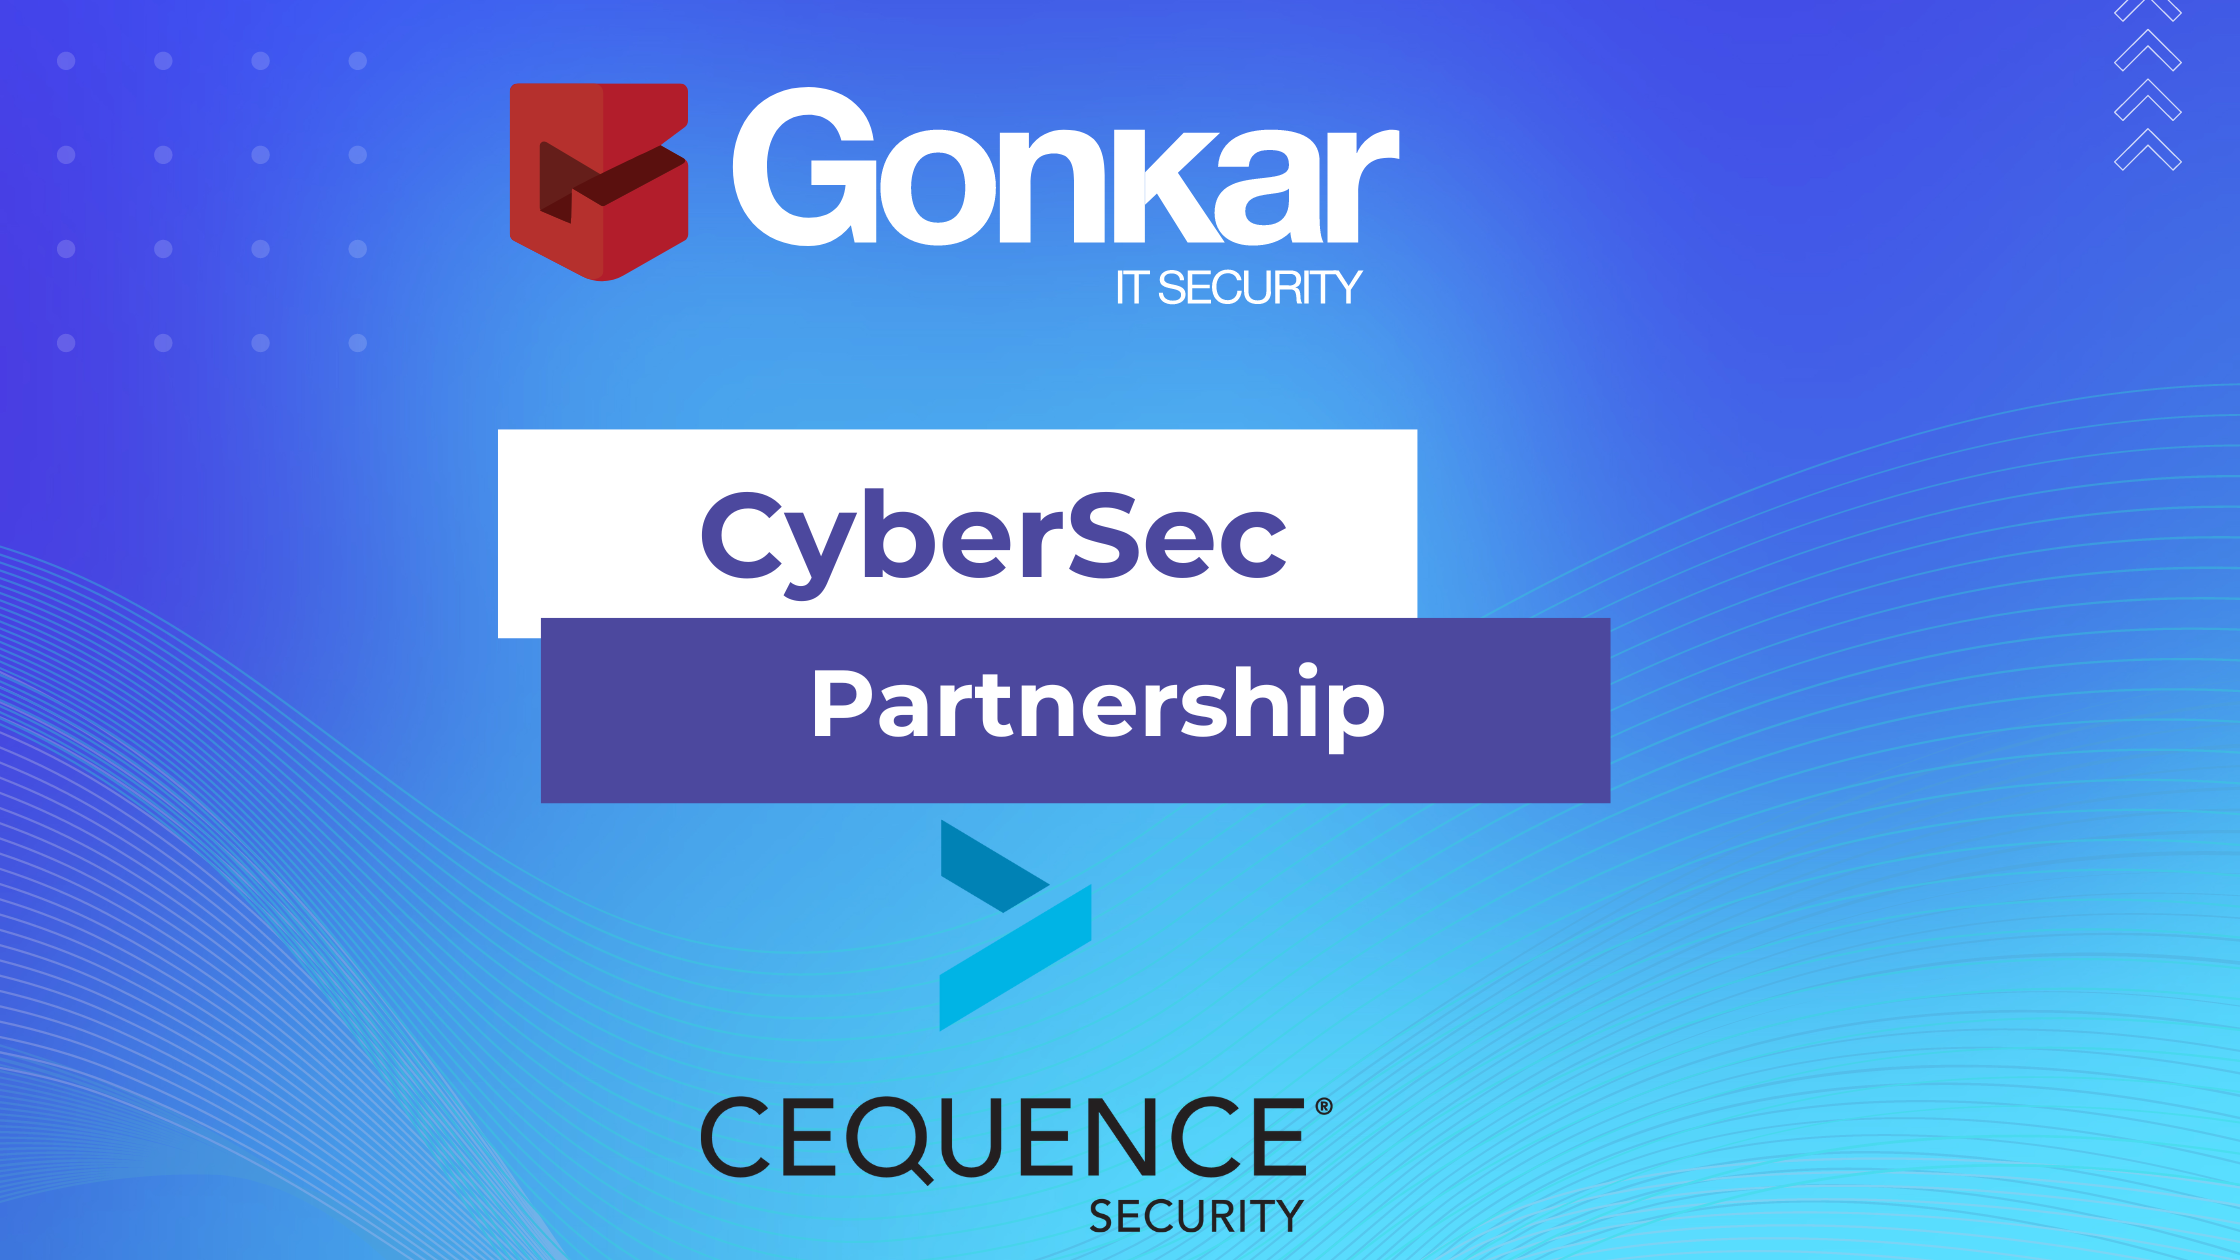 Gonkar Cequence Partnership API Protection